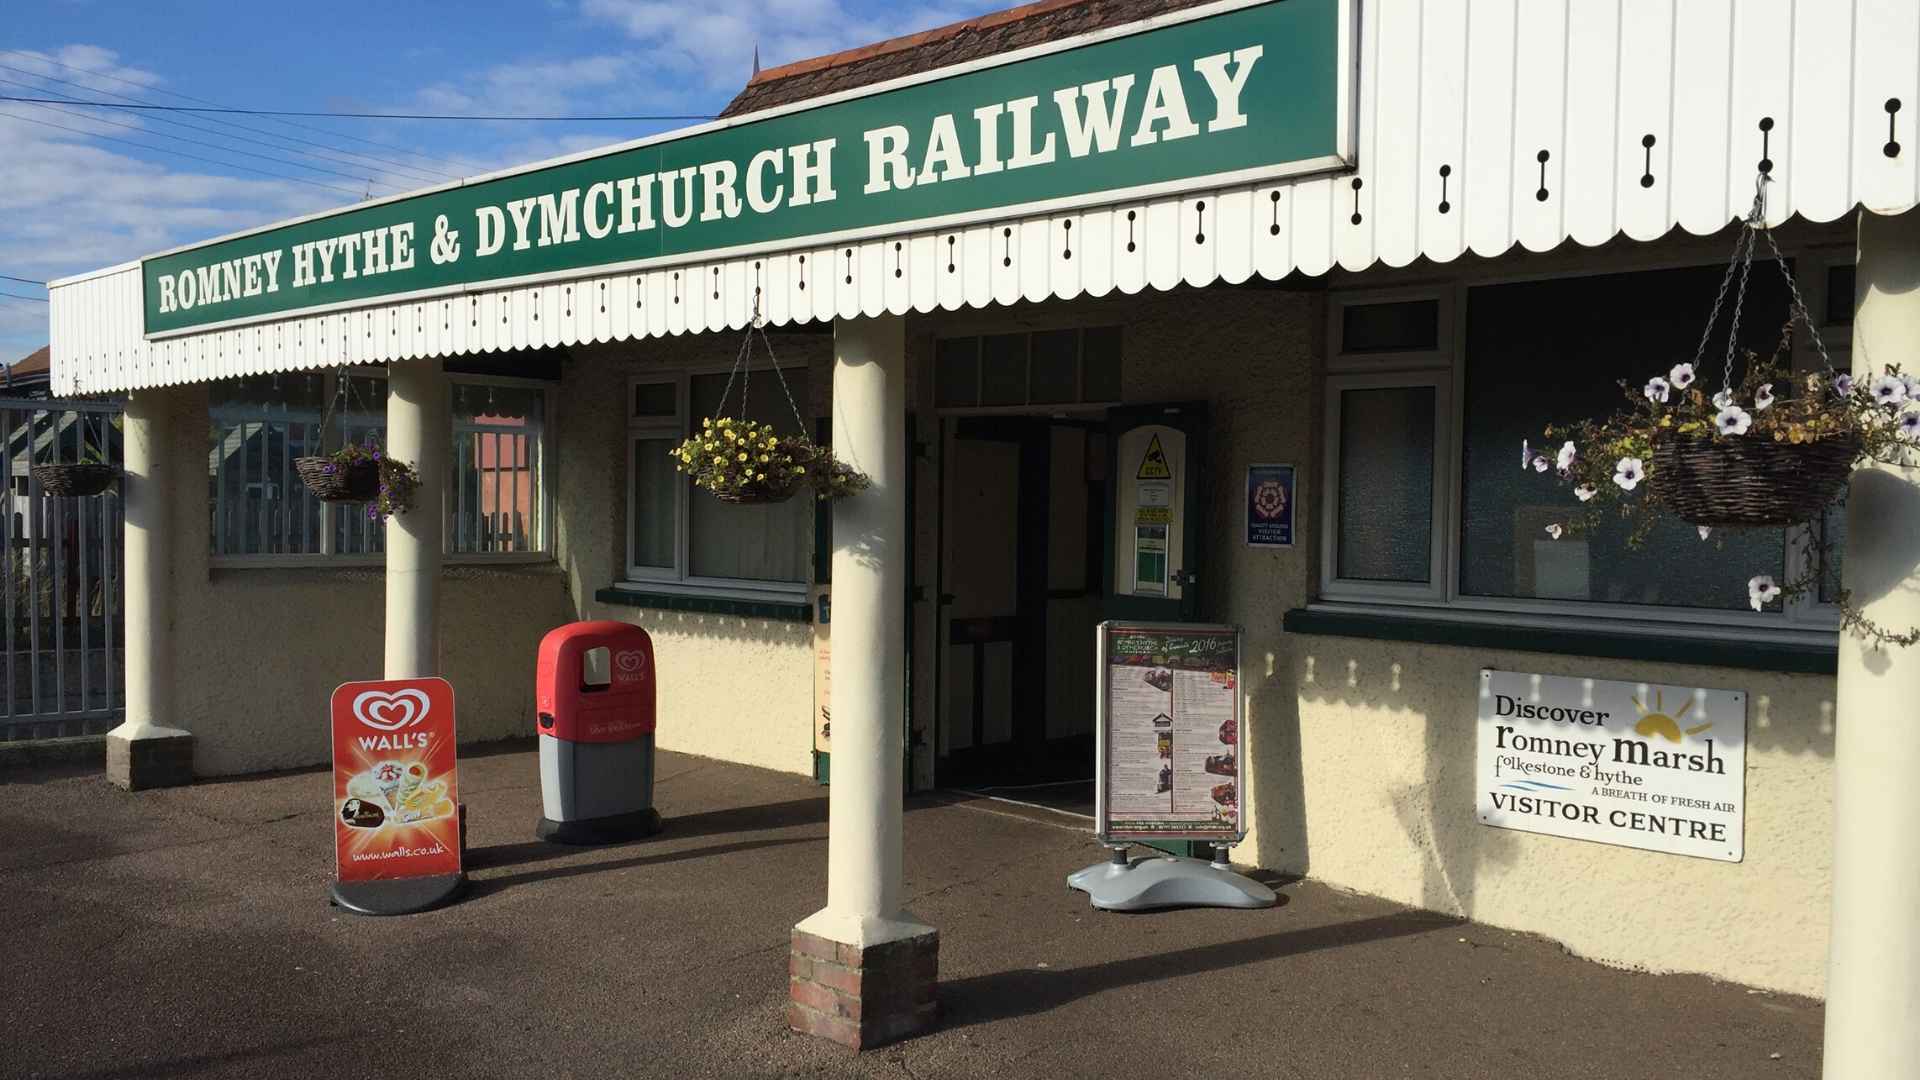 The live camera at Romney, Hythe & Dymchurch Railway